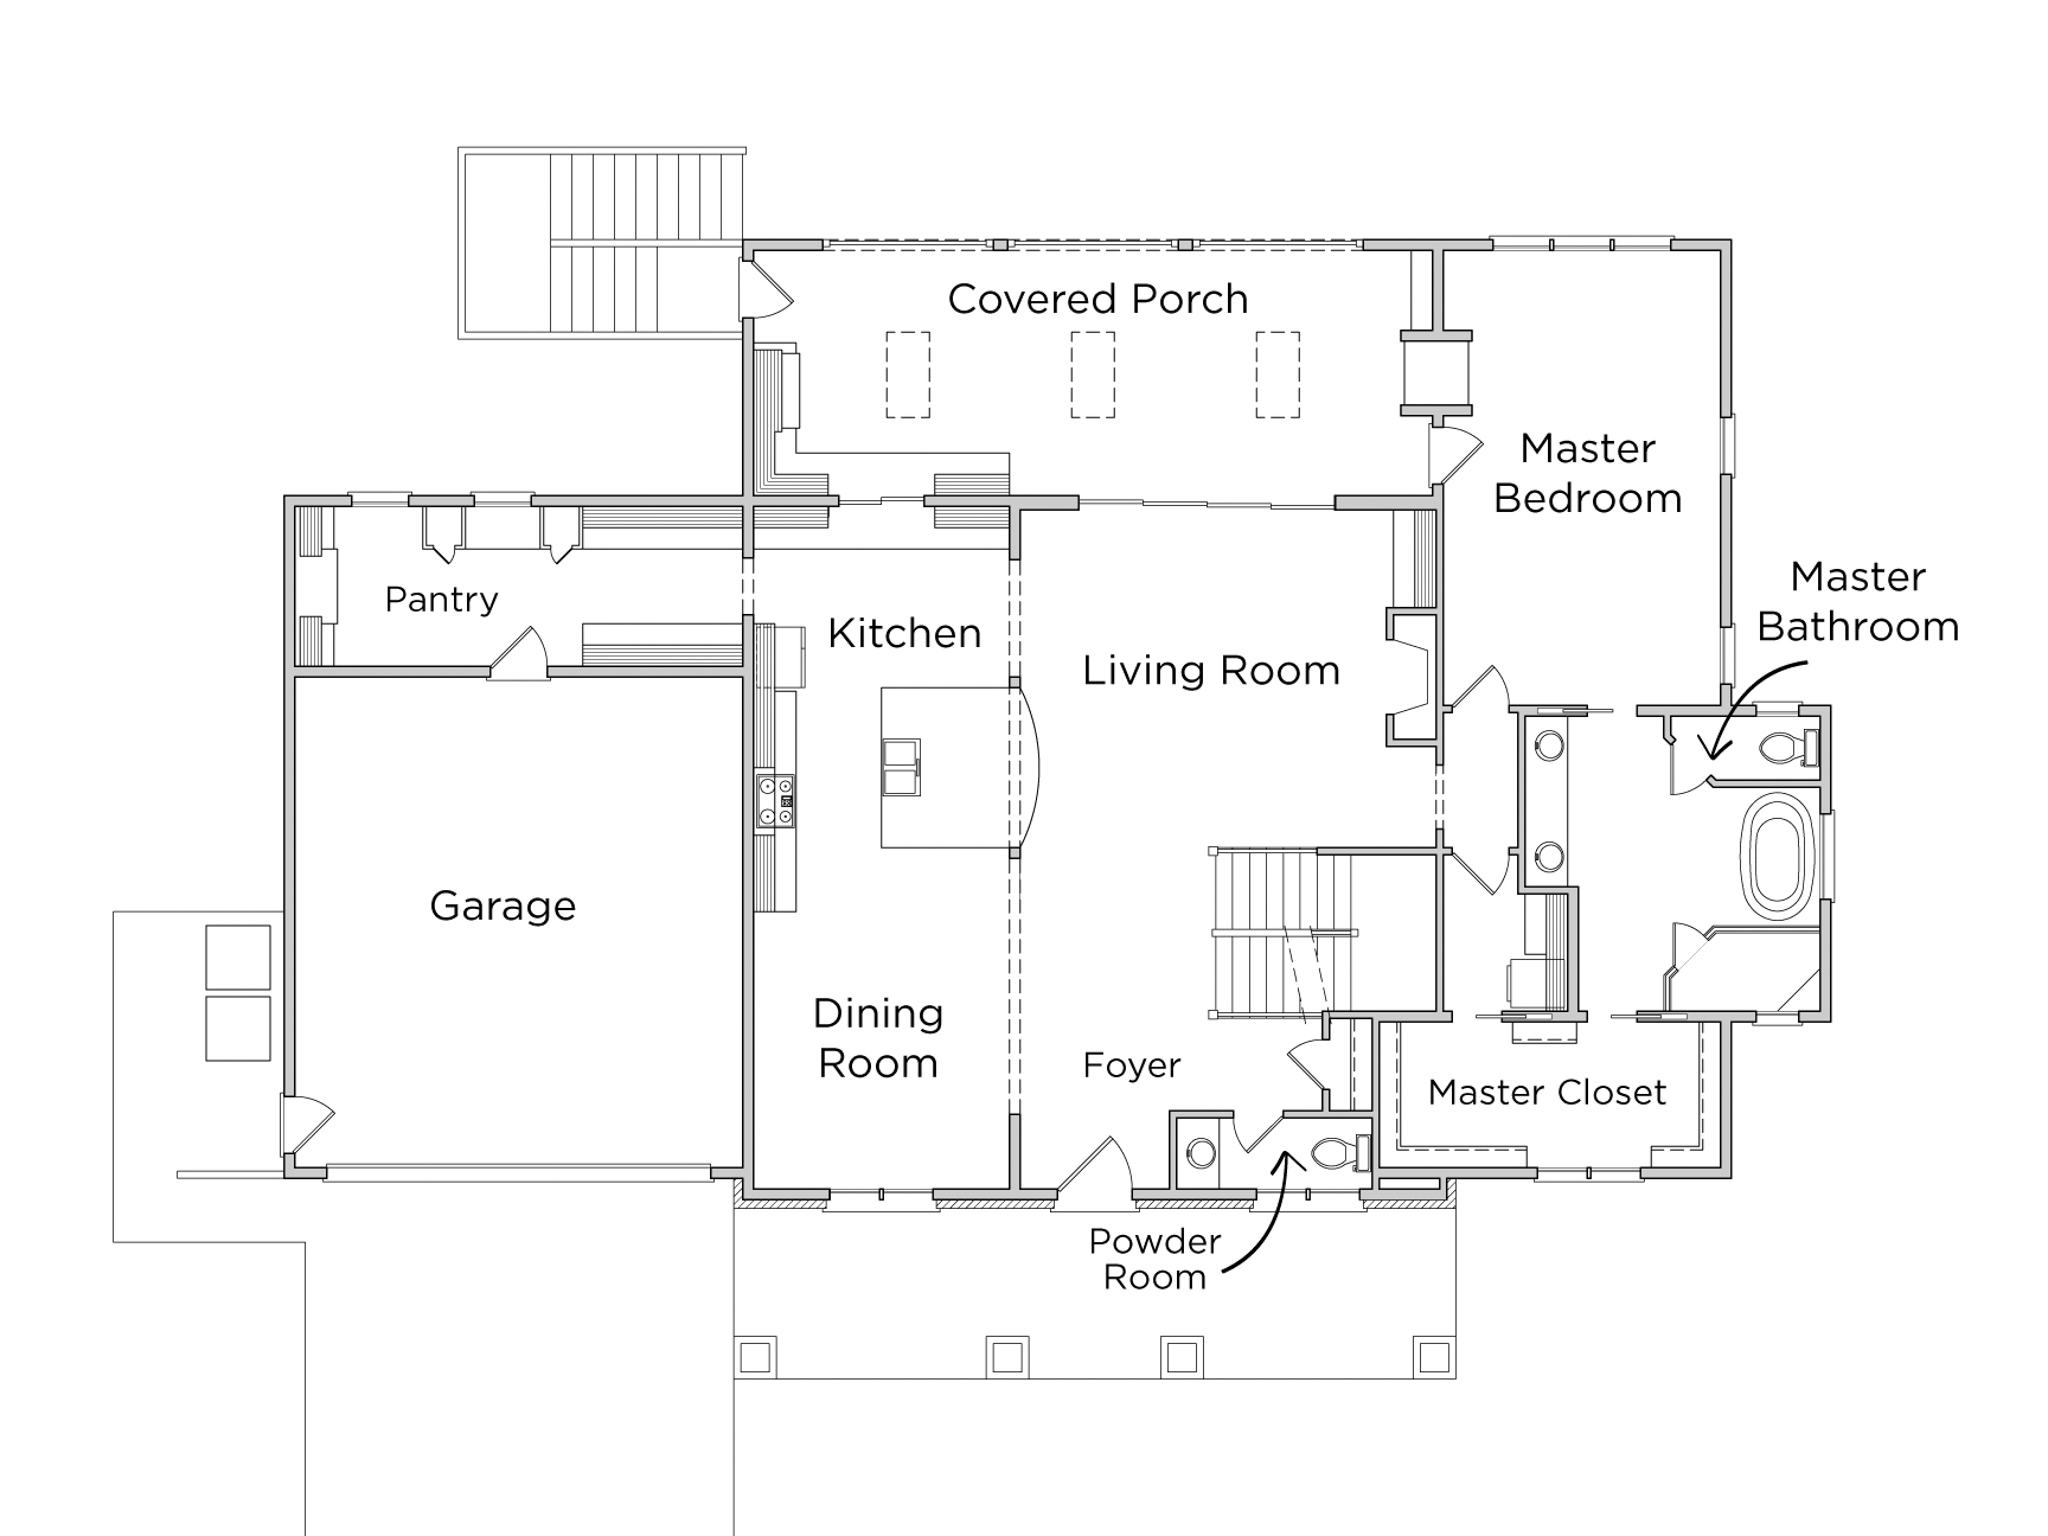  plans regarding small home floor plans. guest houses tanen homes tanco